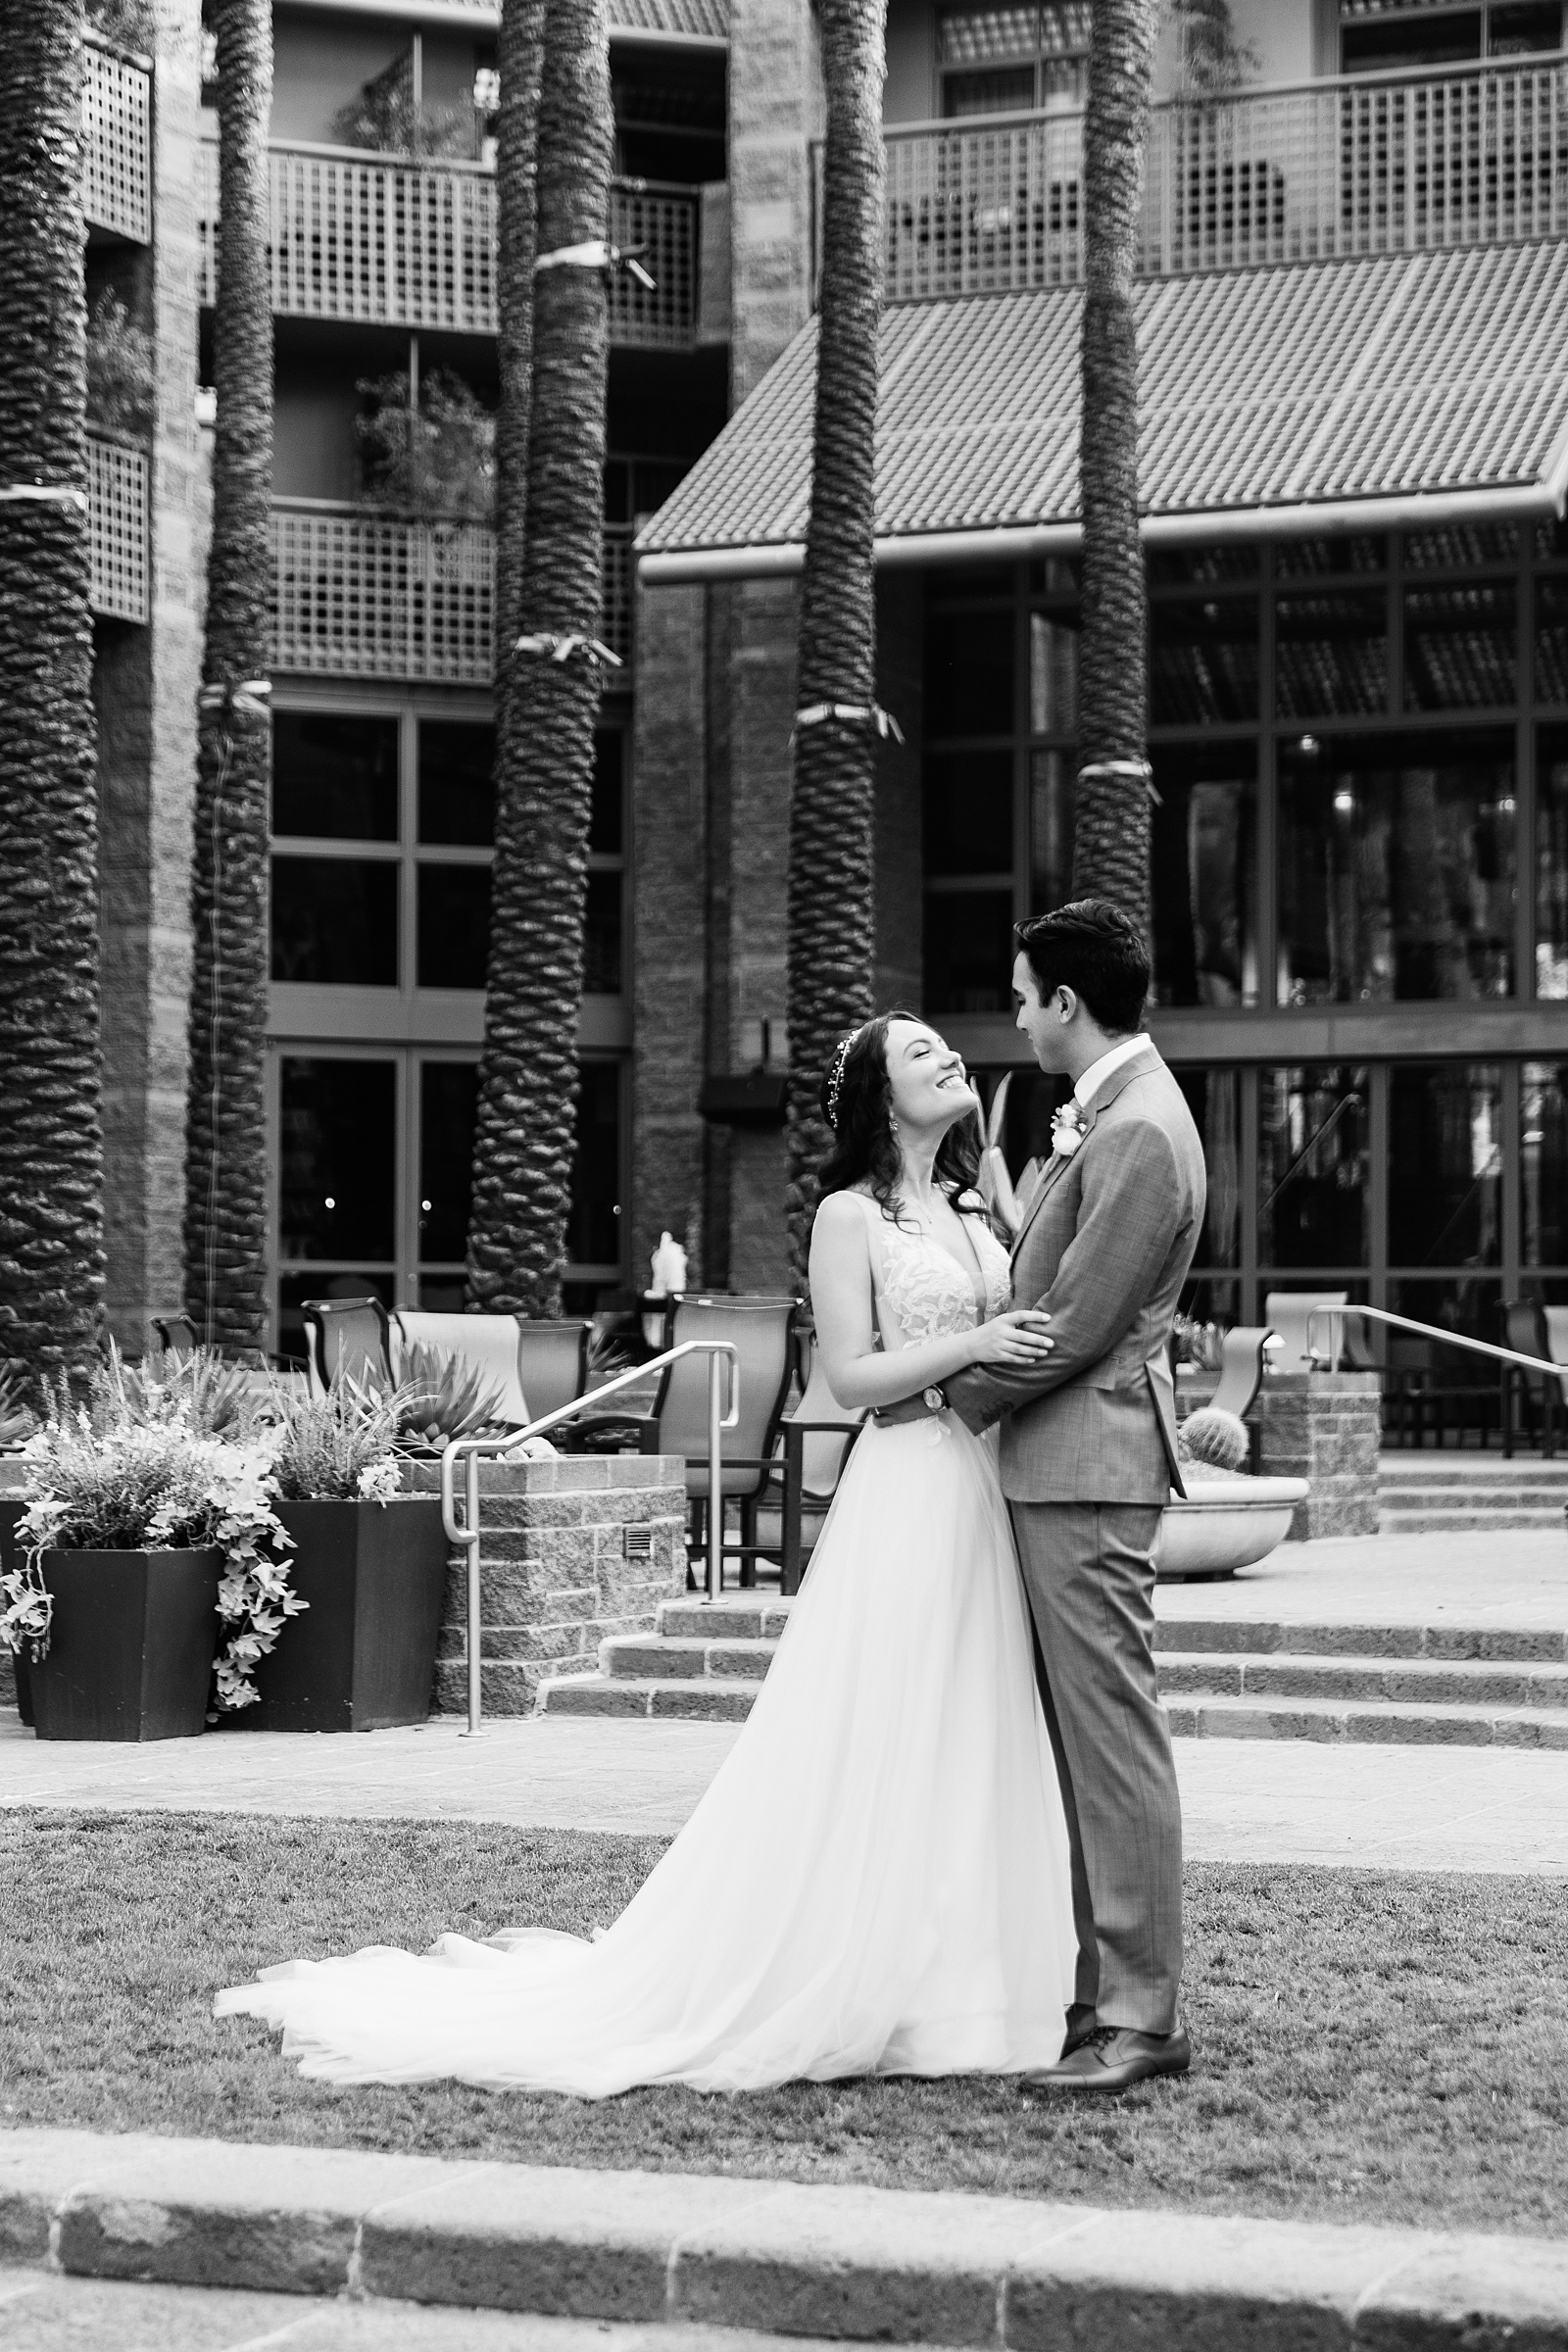 Bride and groom pose during their Hyatt Regency Scottsdale Resort & Spa At Gainey Ranch wedding by Arizona wedding photographer PMA Photography.